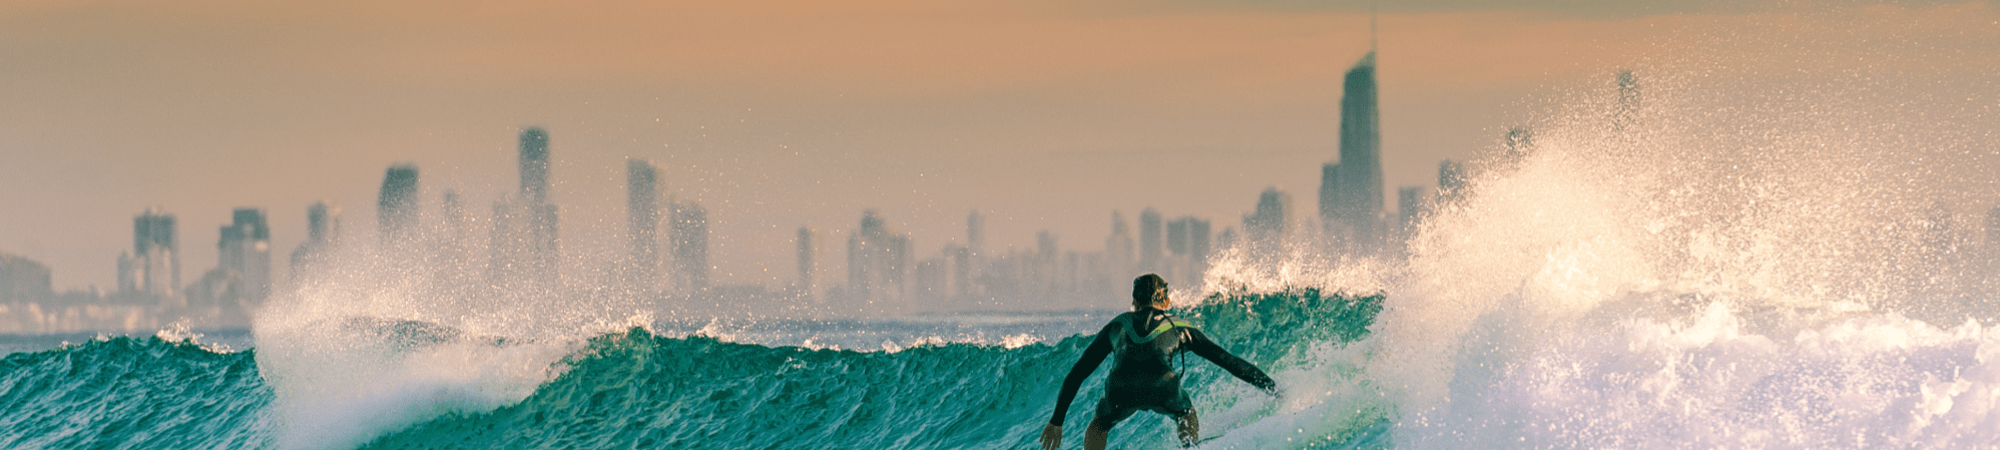 Gold Coast surfer